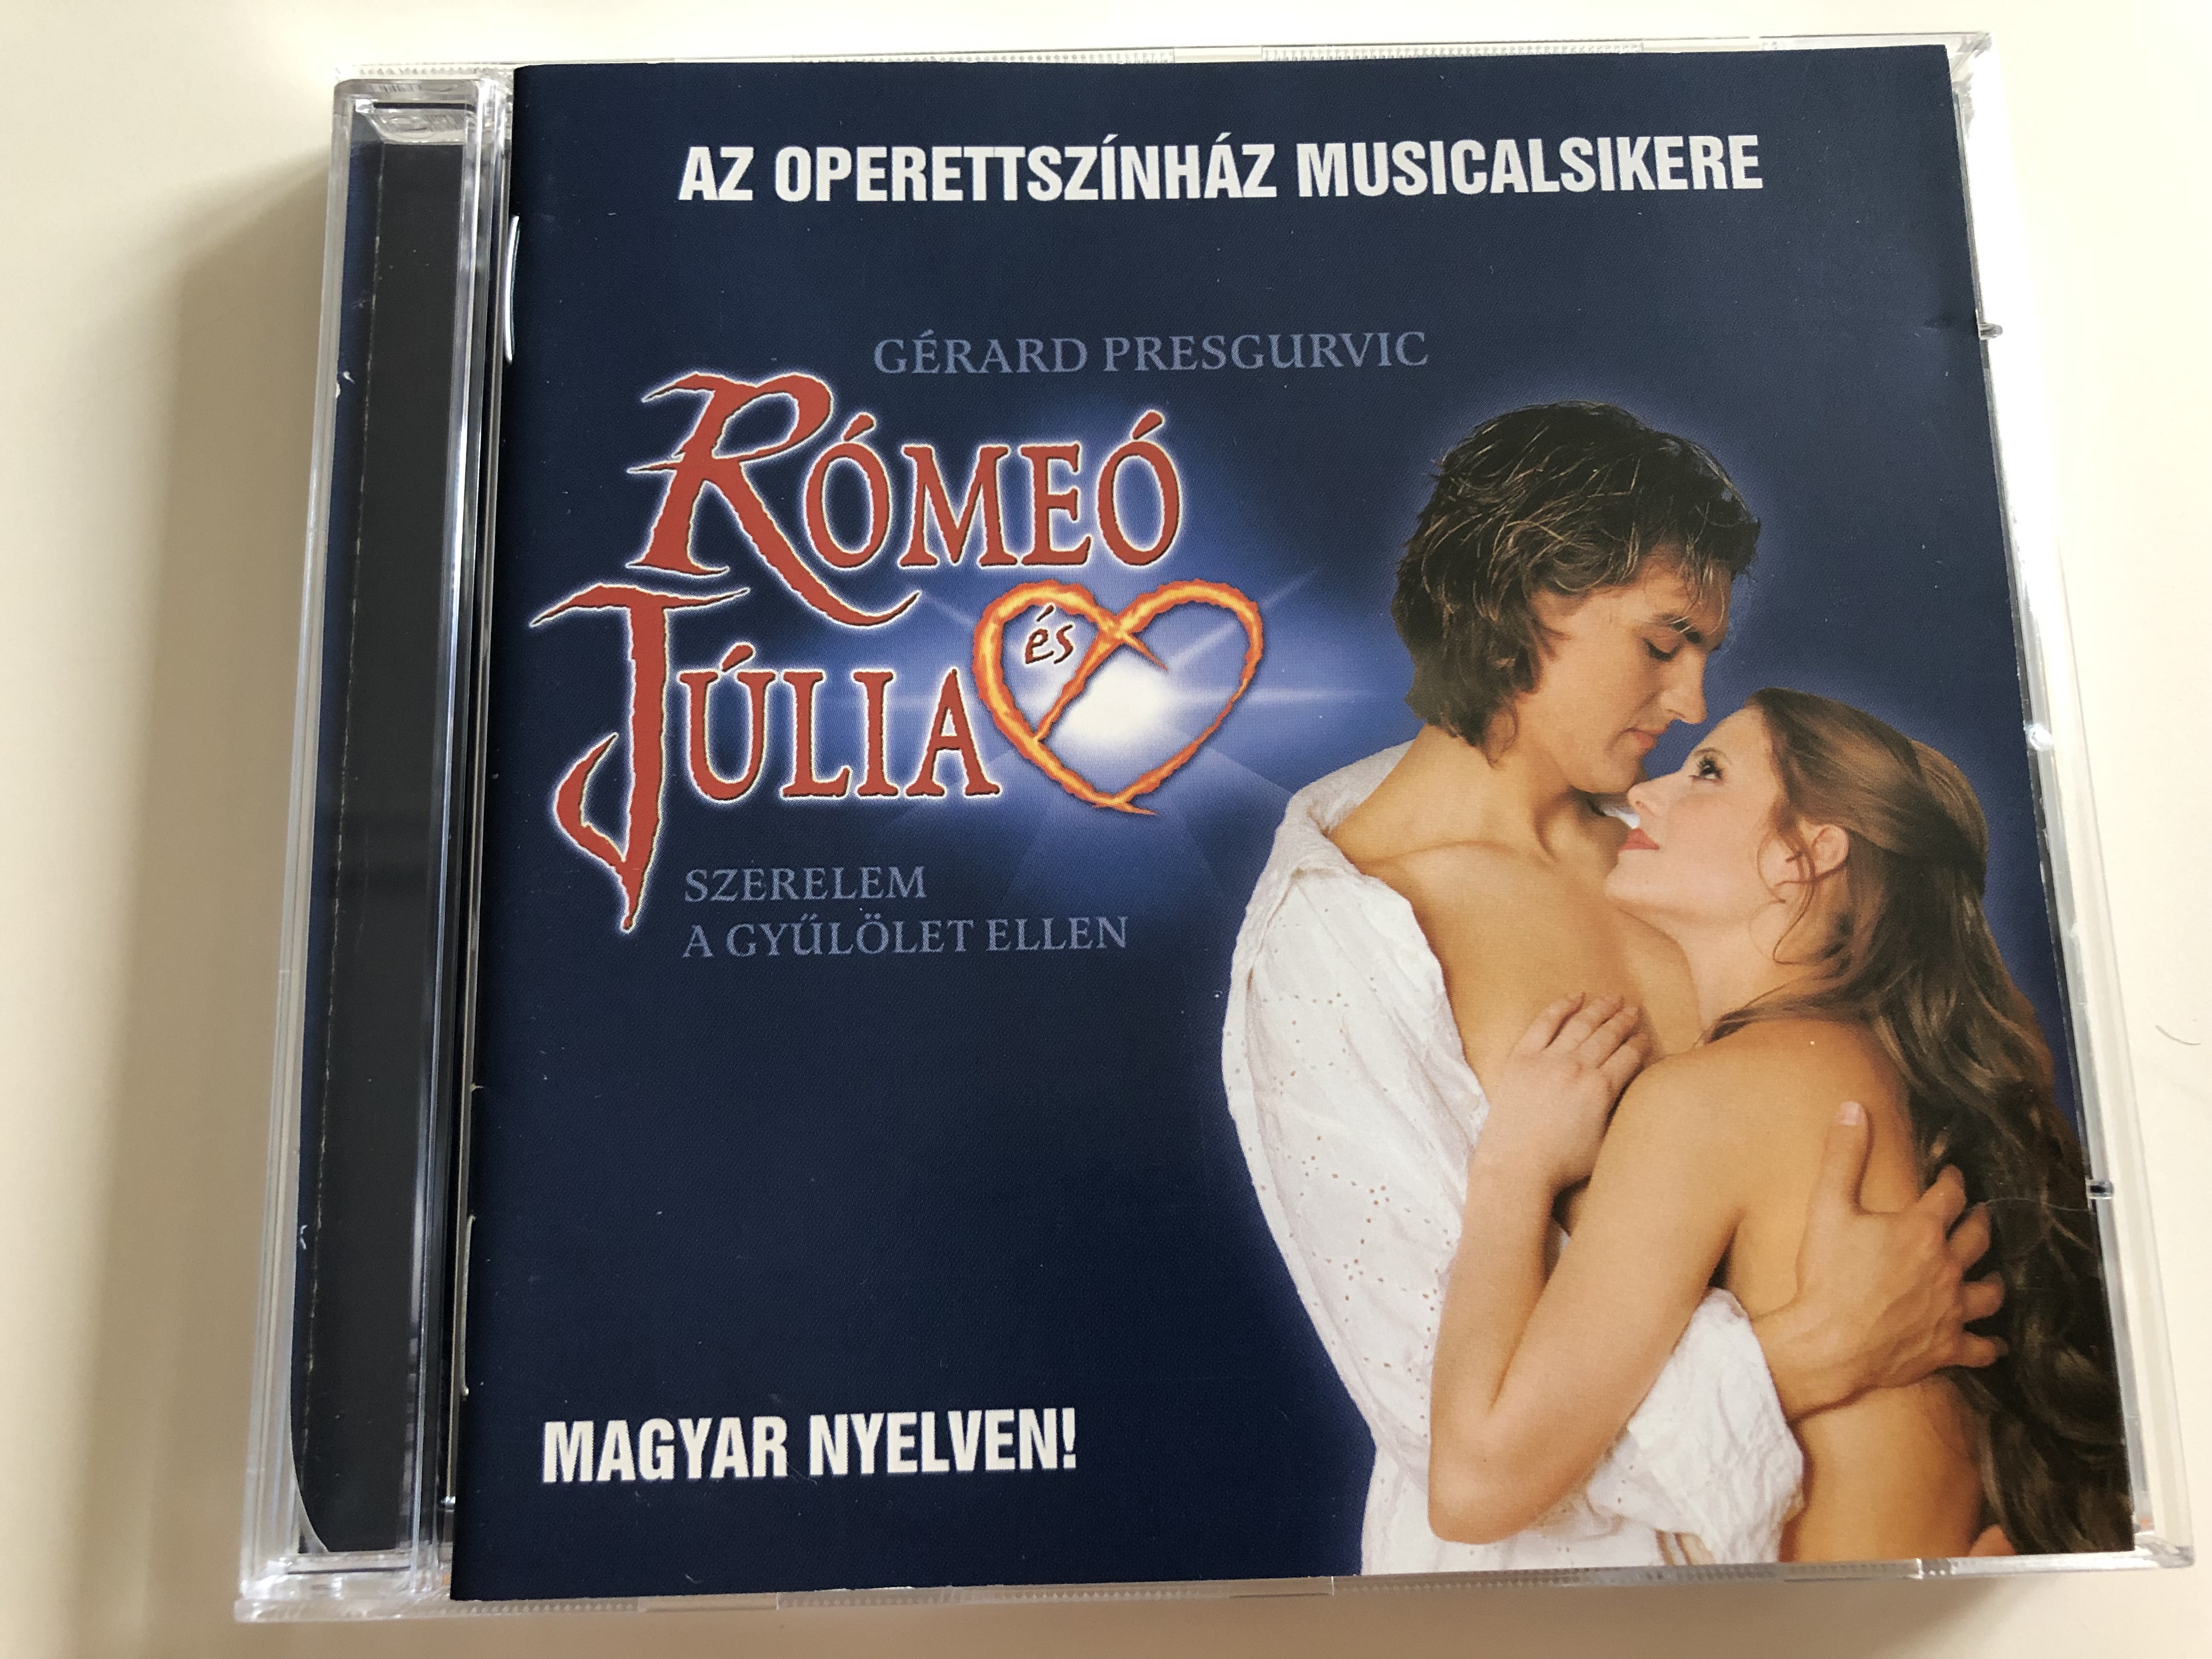 r-me-s-j-lia-szerelem-a-gy-l-let-ellen-audio-cd-2004-romeo-juliet-from-hatred-to-love-g-rard-presgurvic-musical-nek-legszebb-dalai-hungarian-version-of-the-musical-by-g-rard-presgurvic-1-.jpg